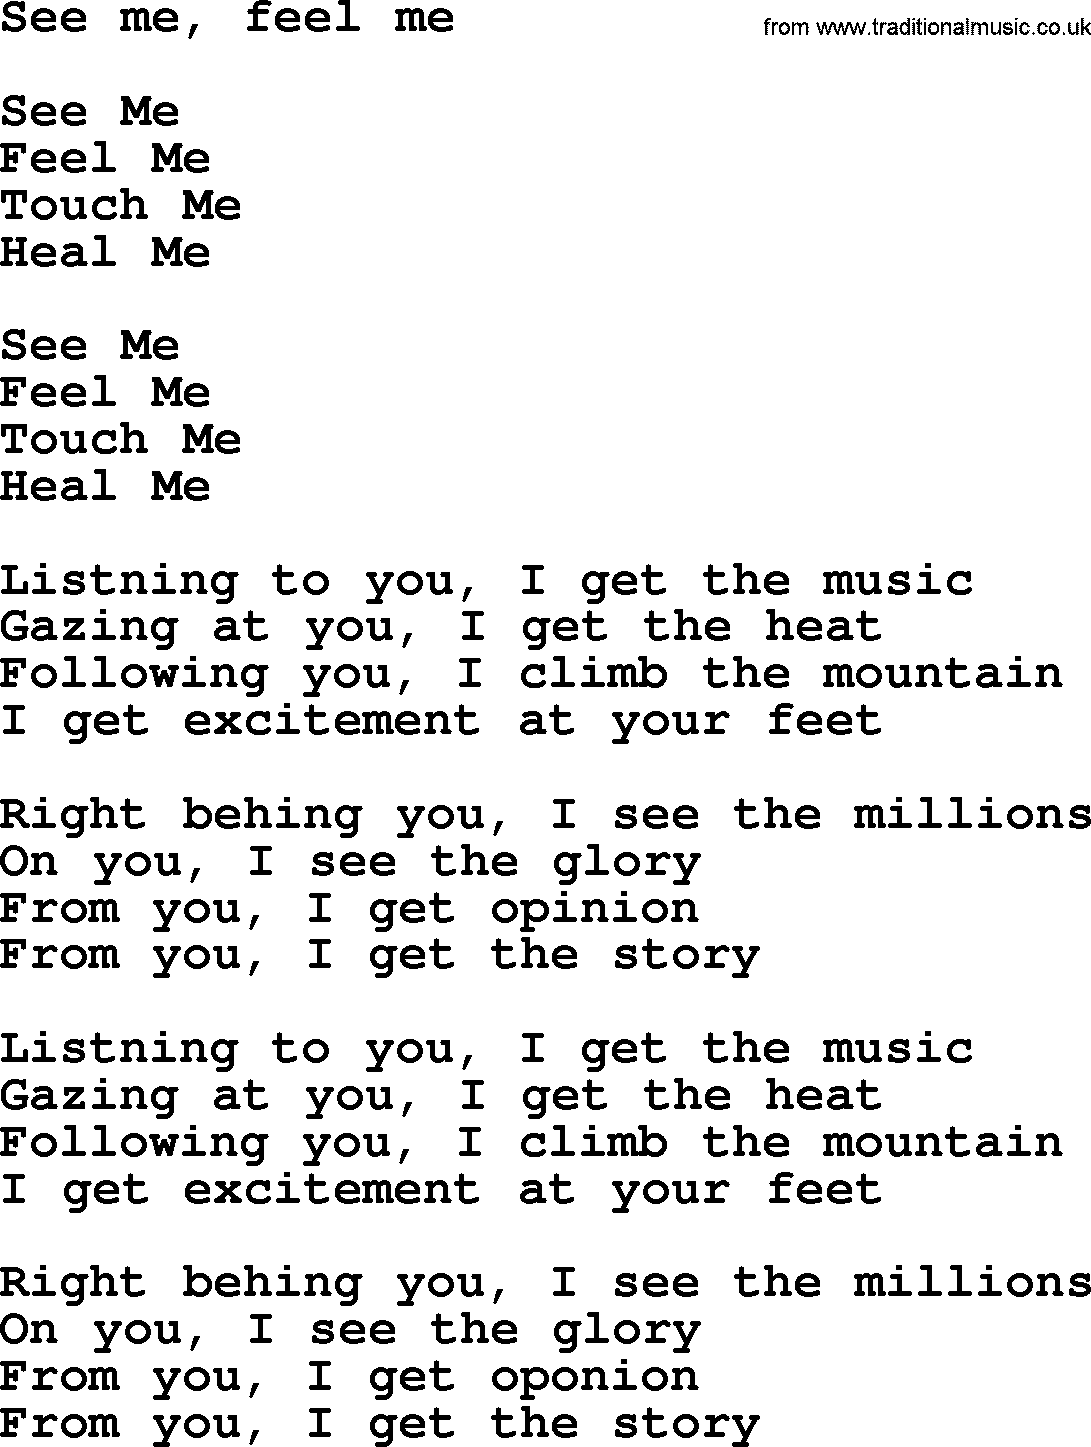 The Byrds song See Me, Feel Me, lyrics